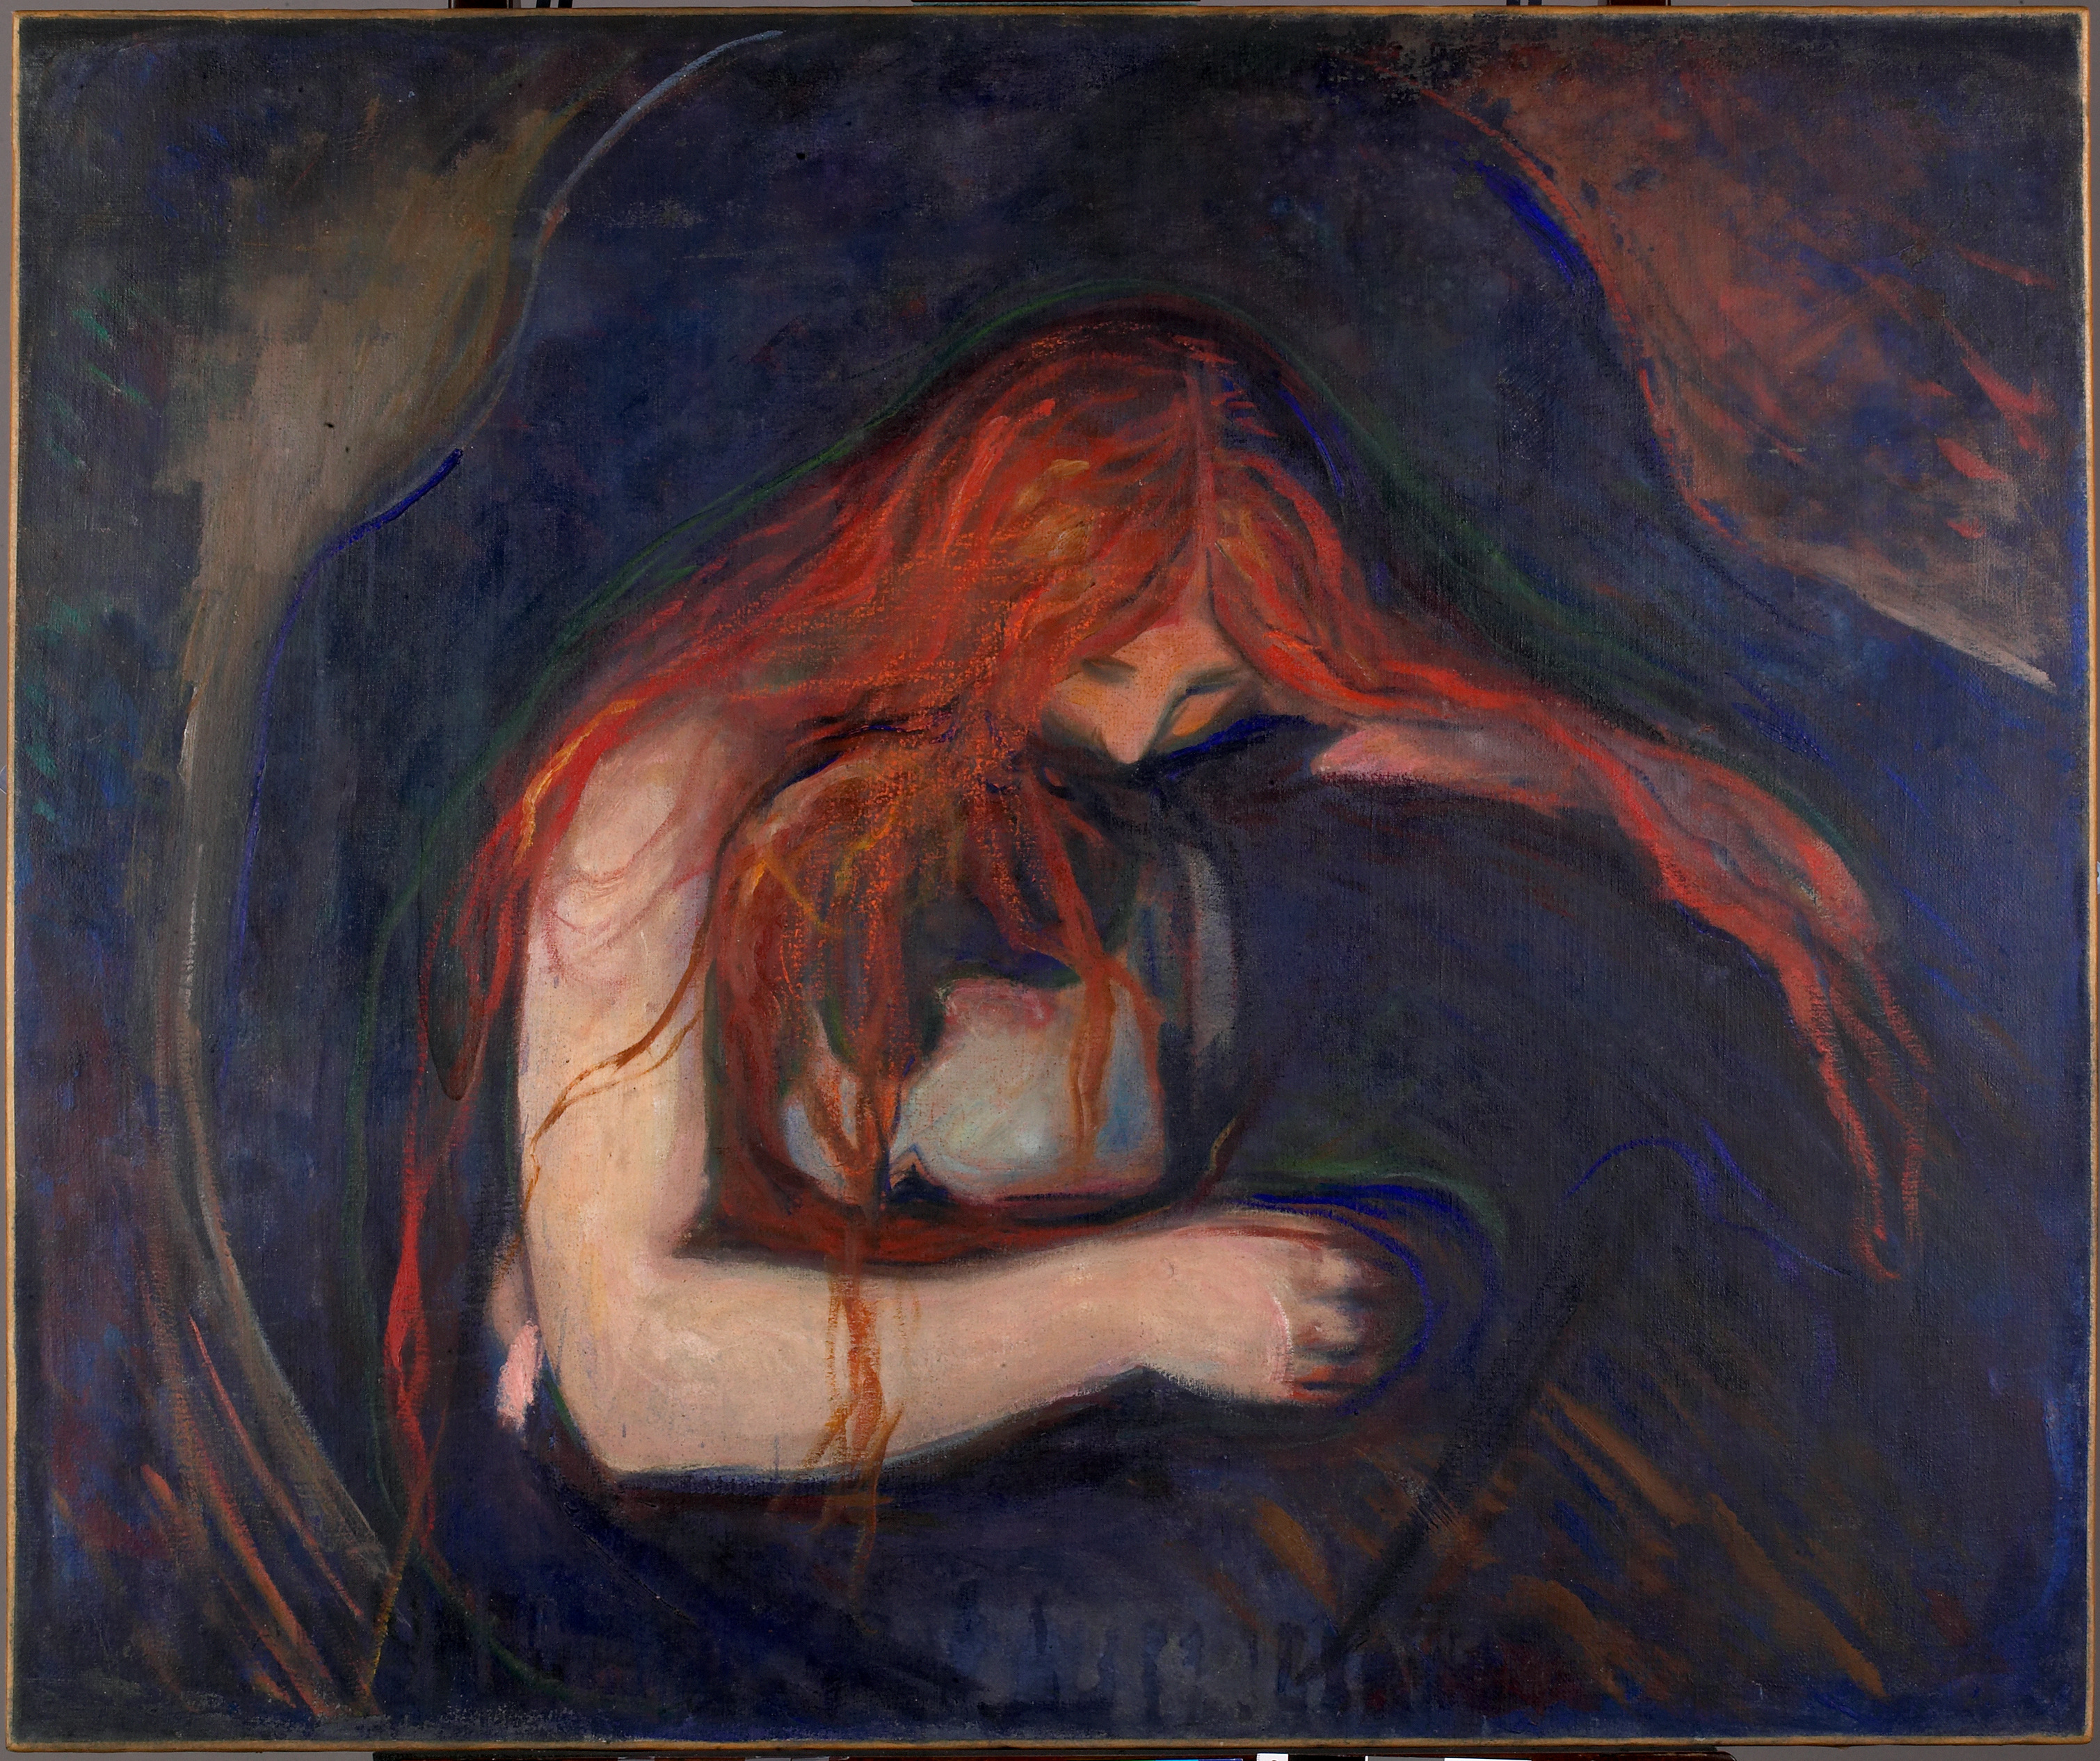 Vampir by Edvard Munch - 1895 